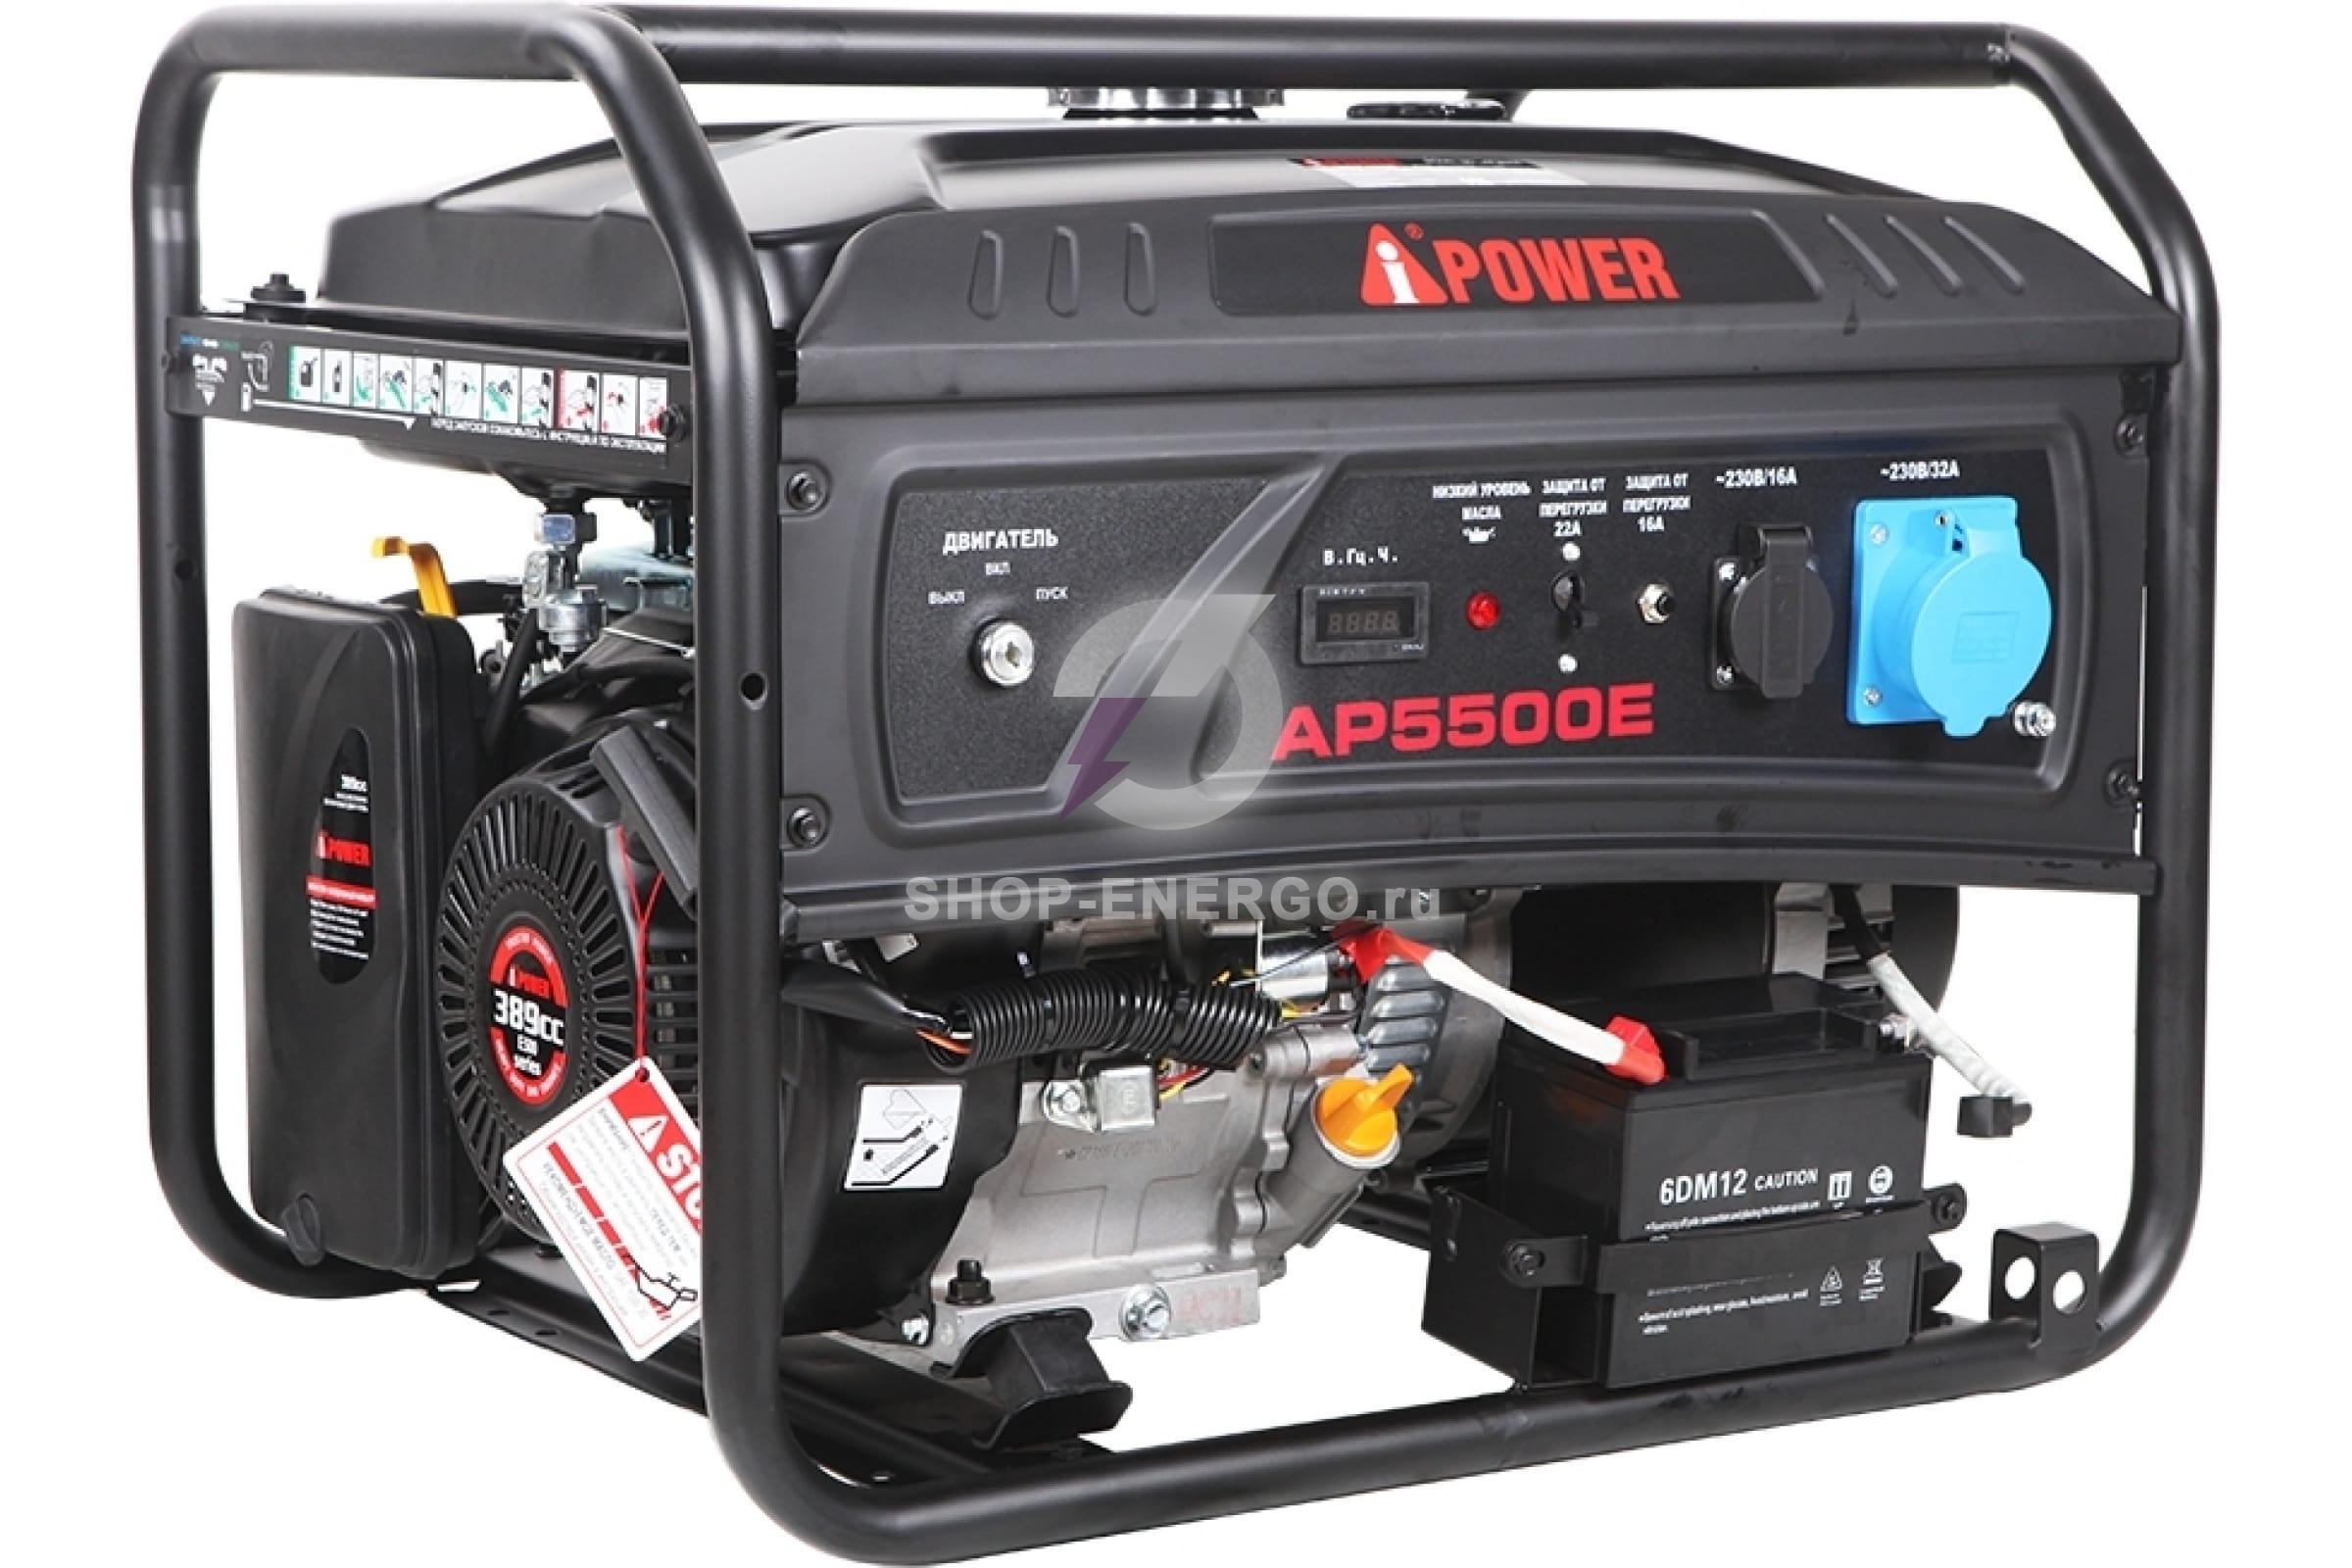   A-iPower lite A5500E